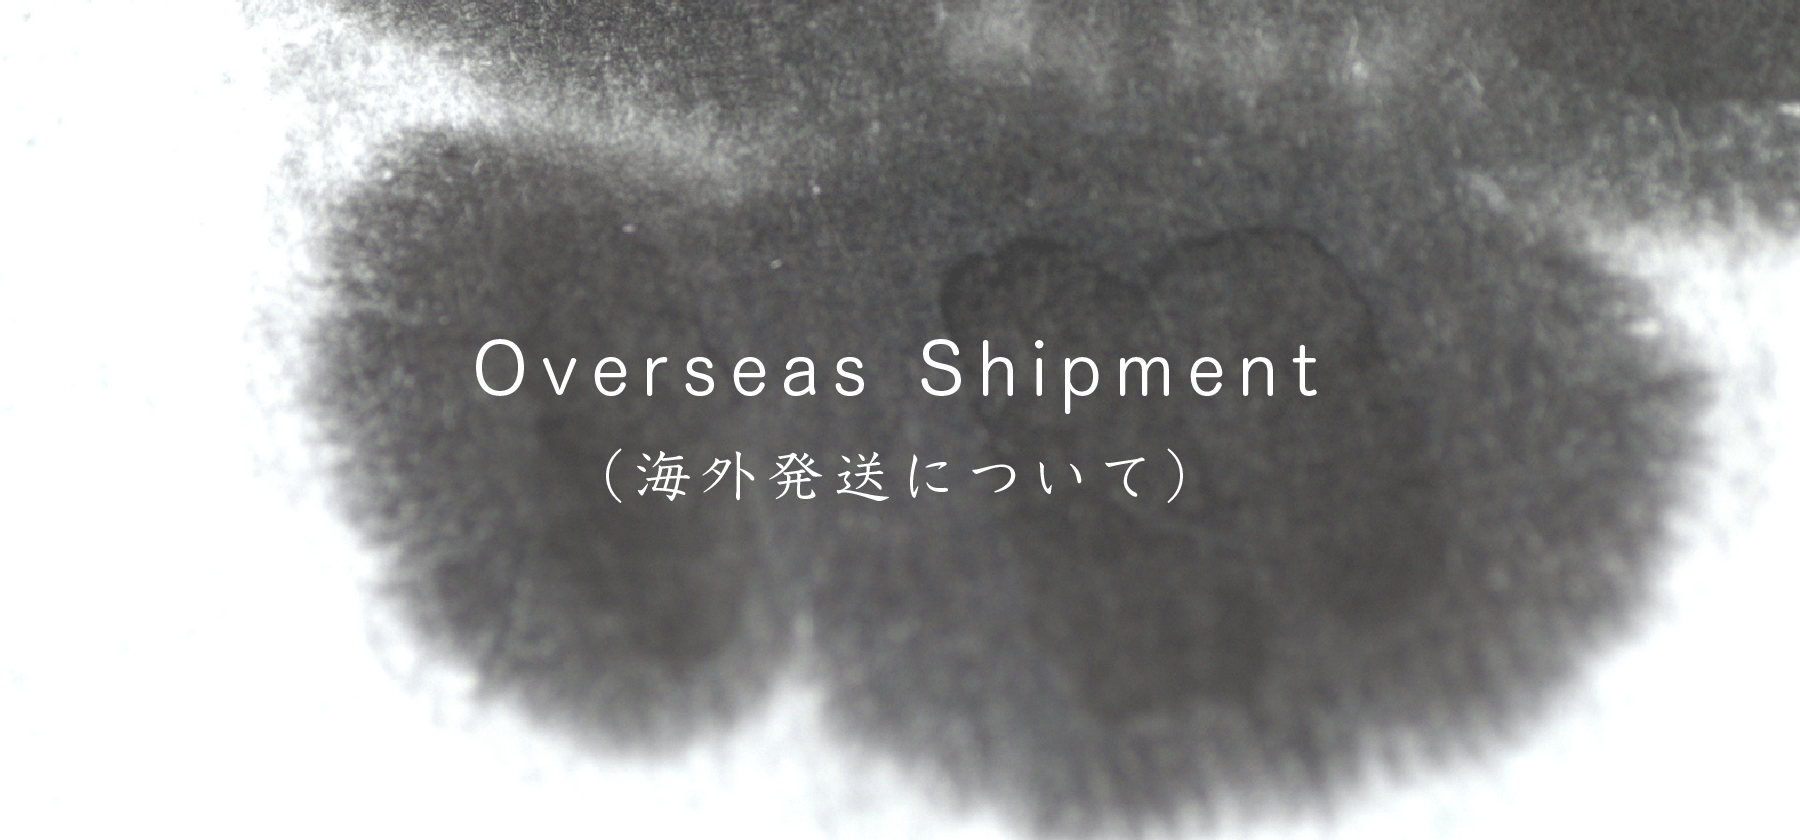 Overseas Shipment